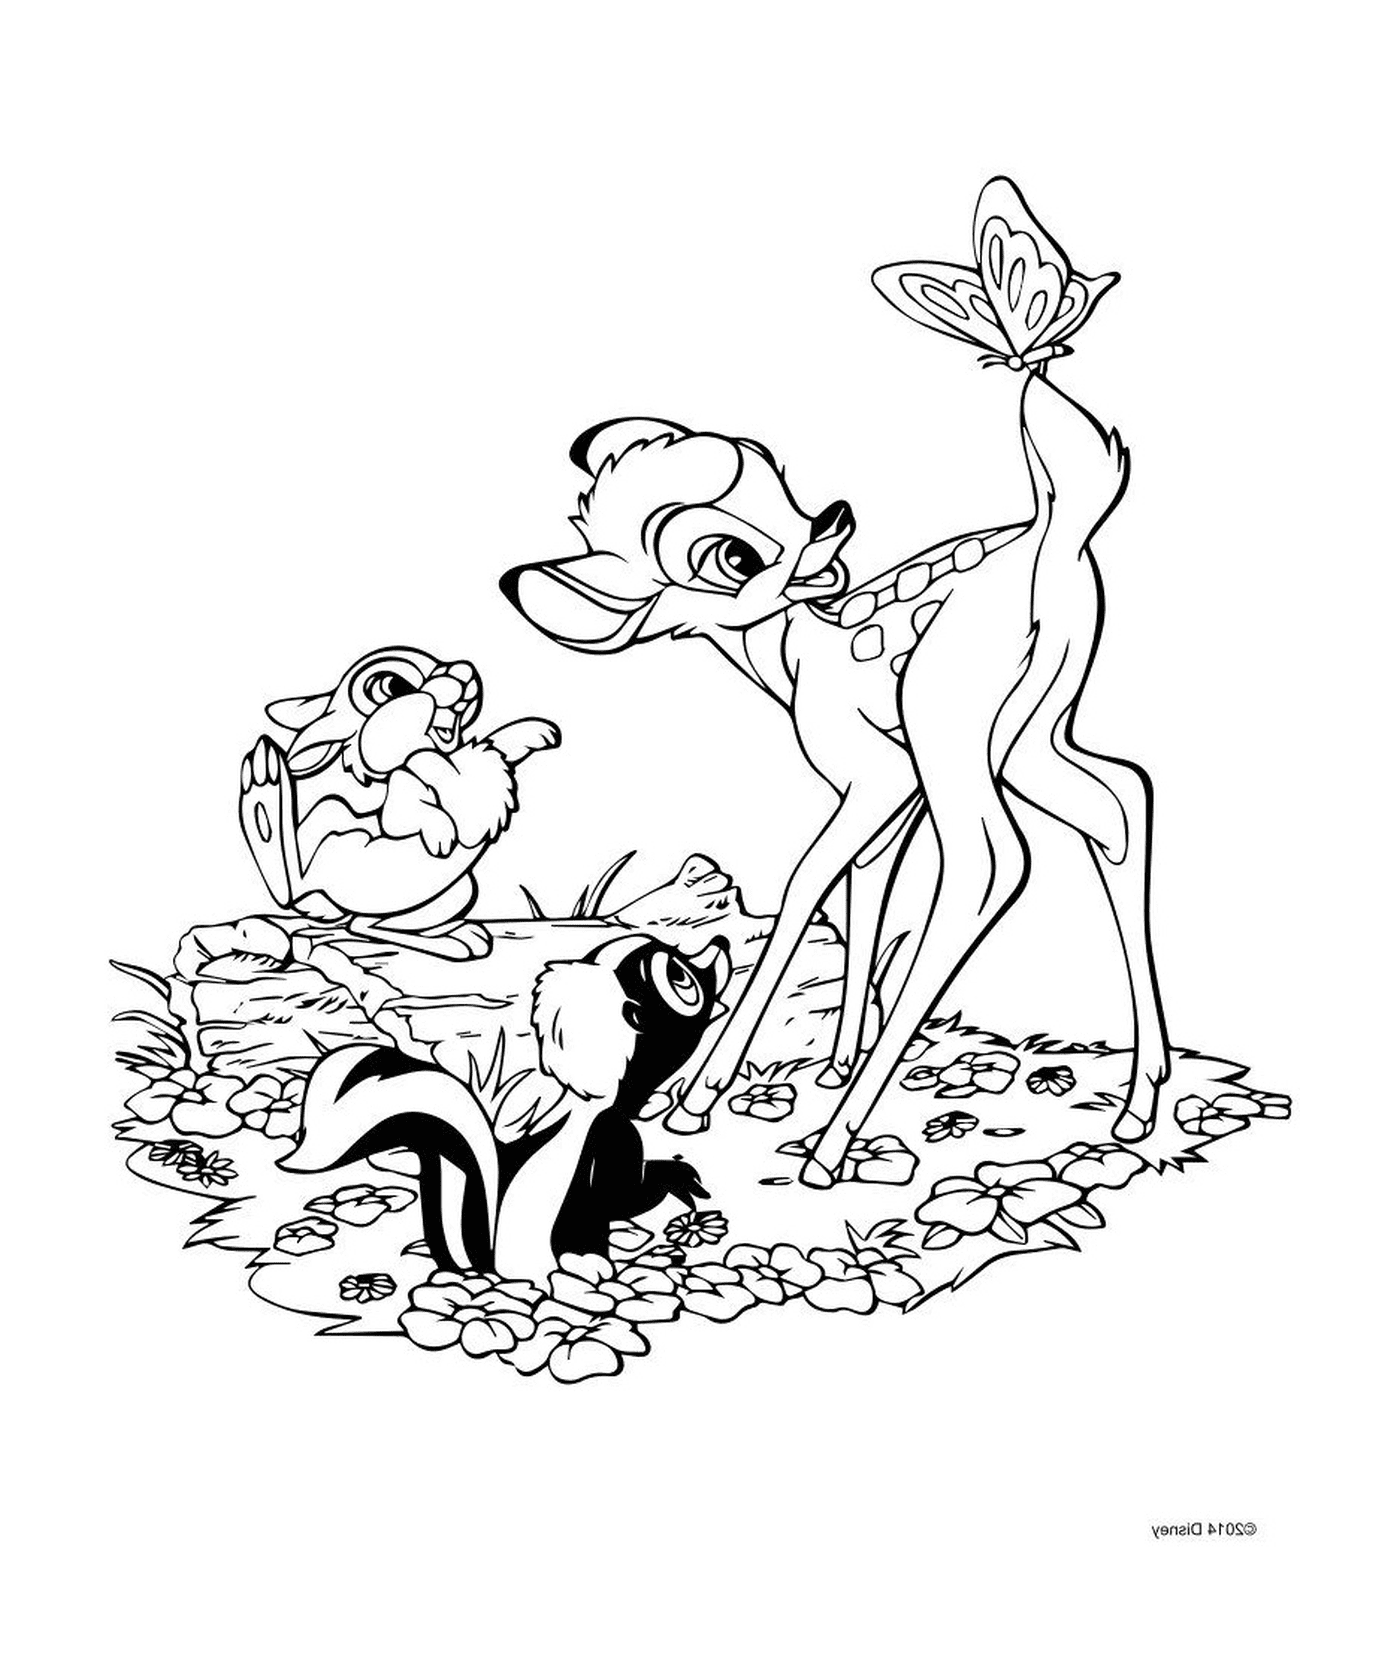  Bambi y Panpan, una torpe amistad 